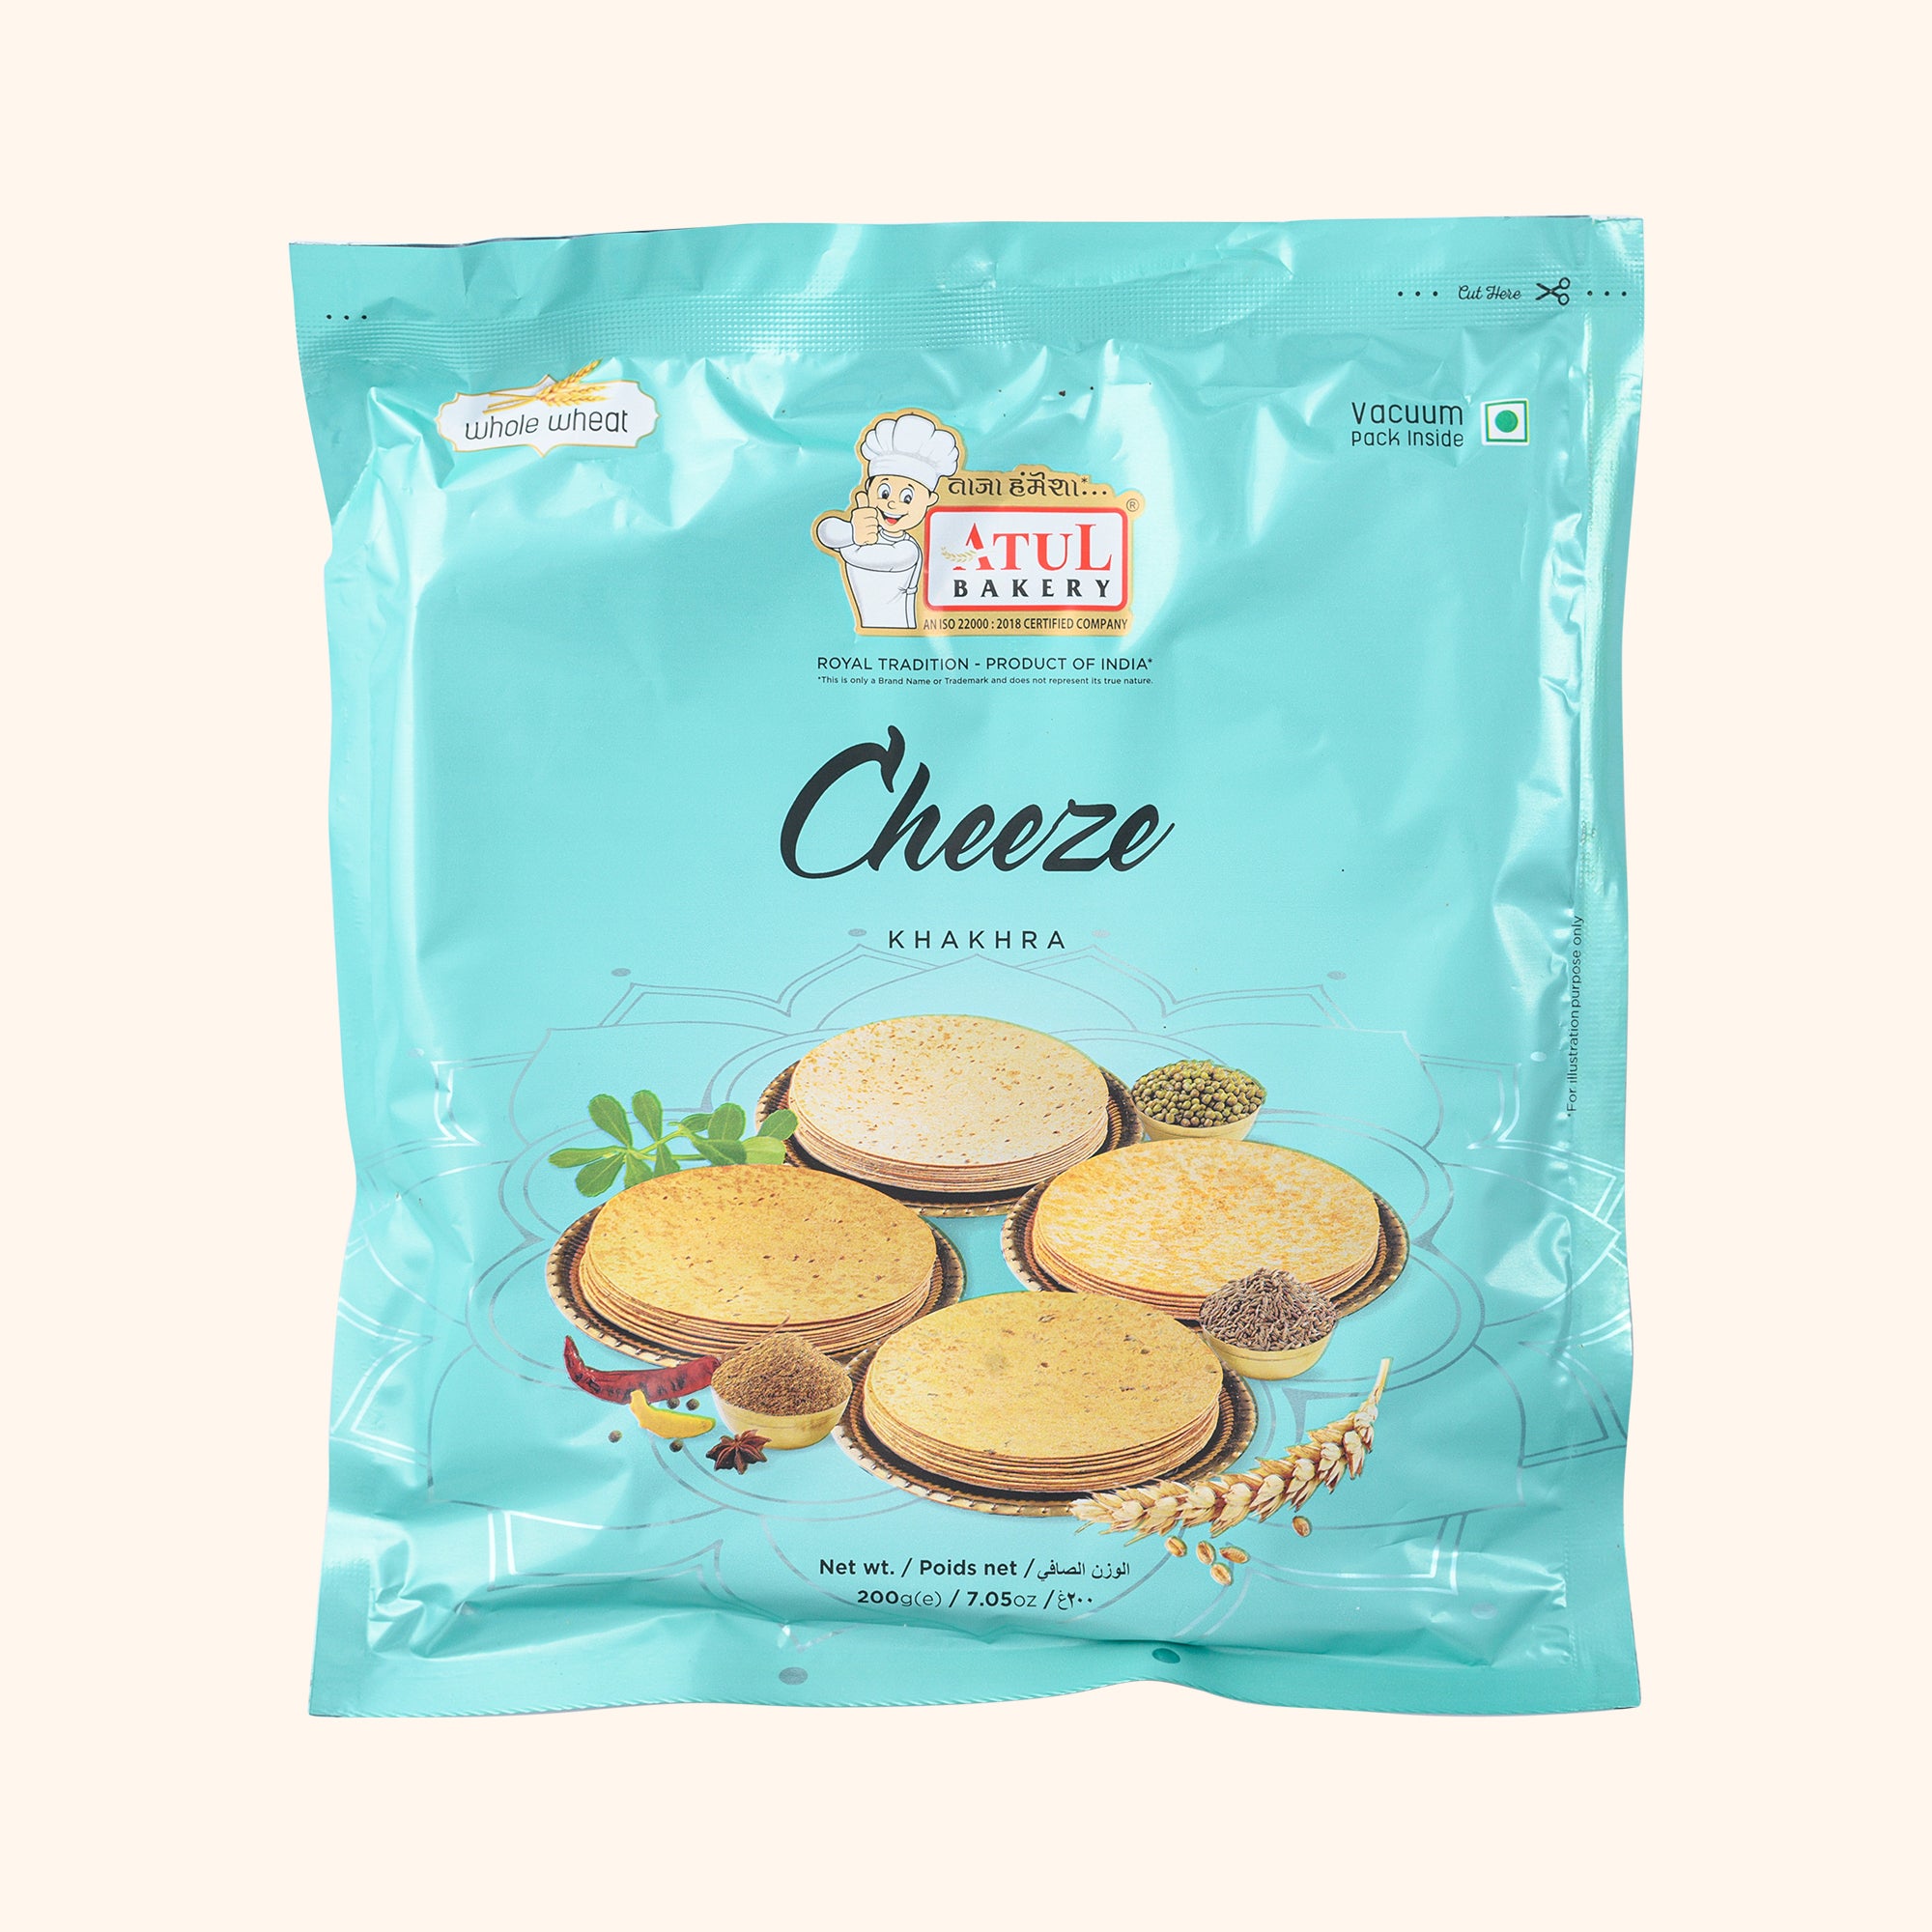 Atul Bakery Cheese Khakhra || Ready to Eat Snacks || PRODUCT OF INDIA || Whole Wheat